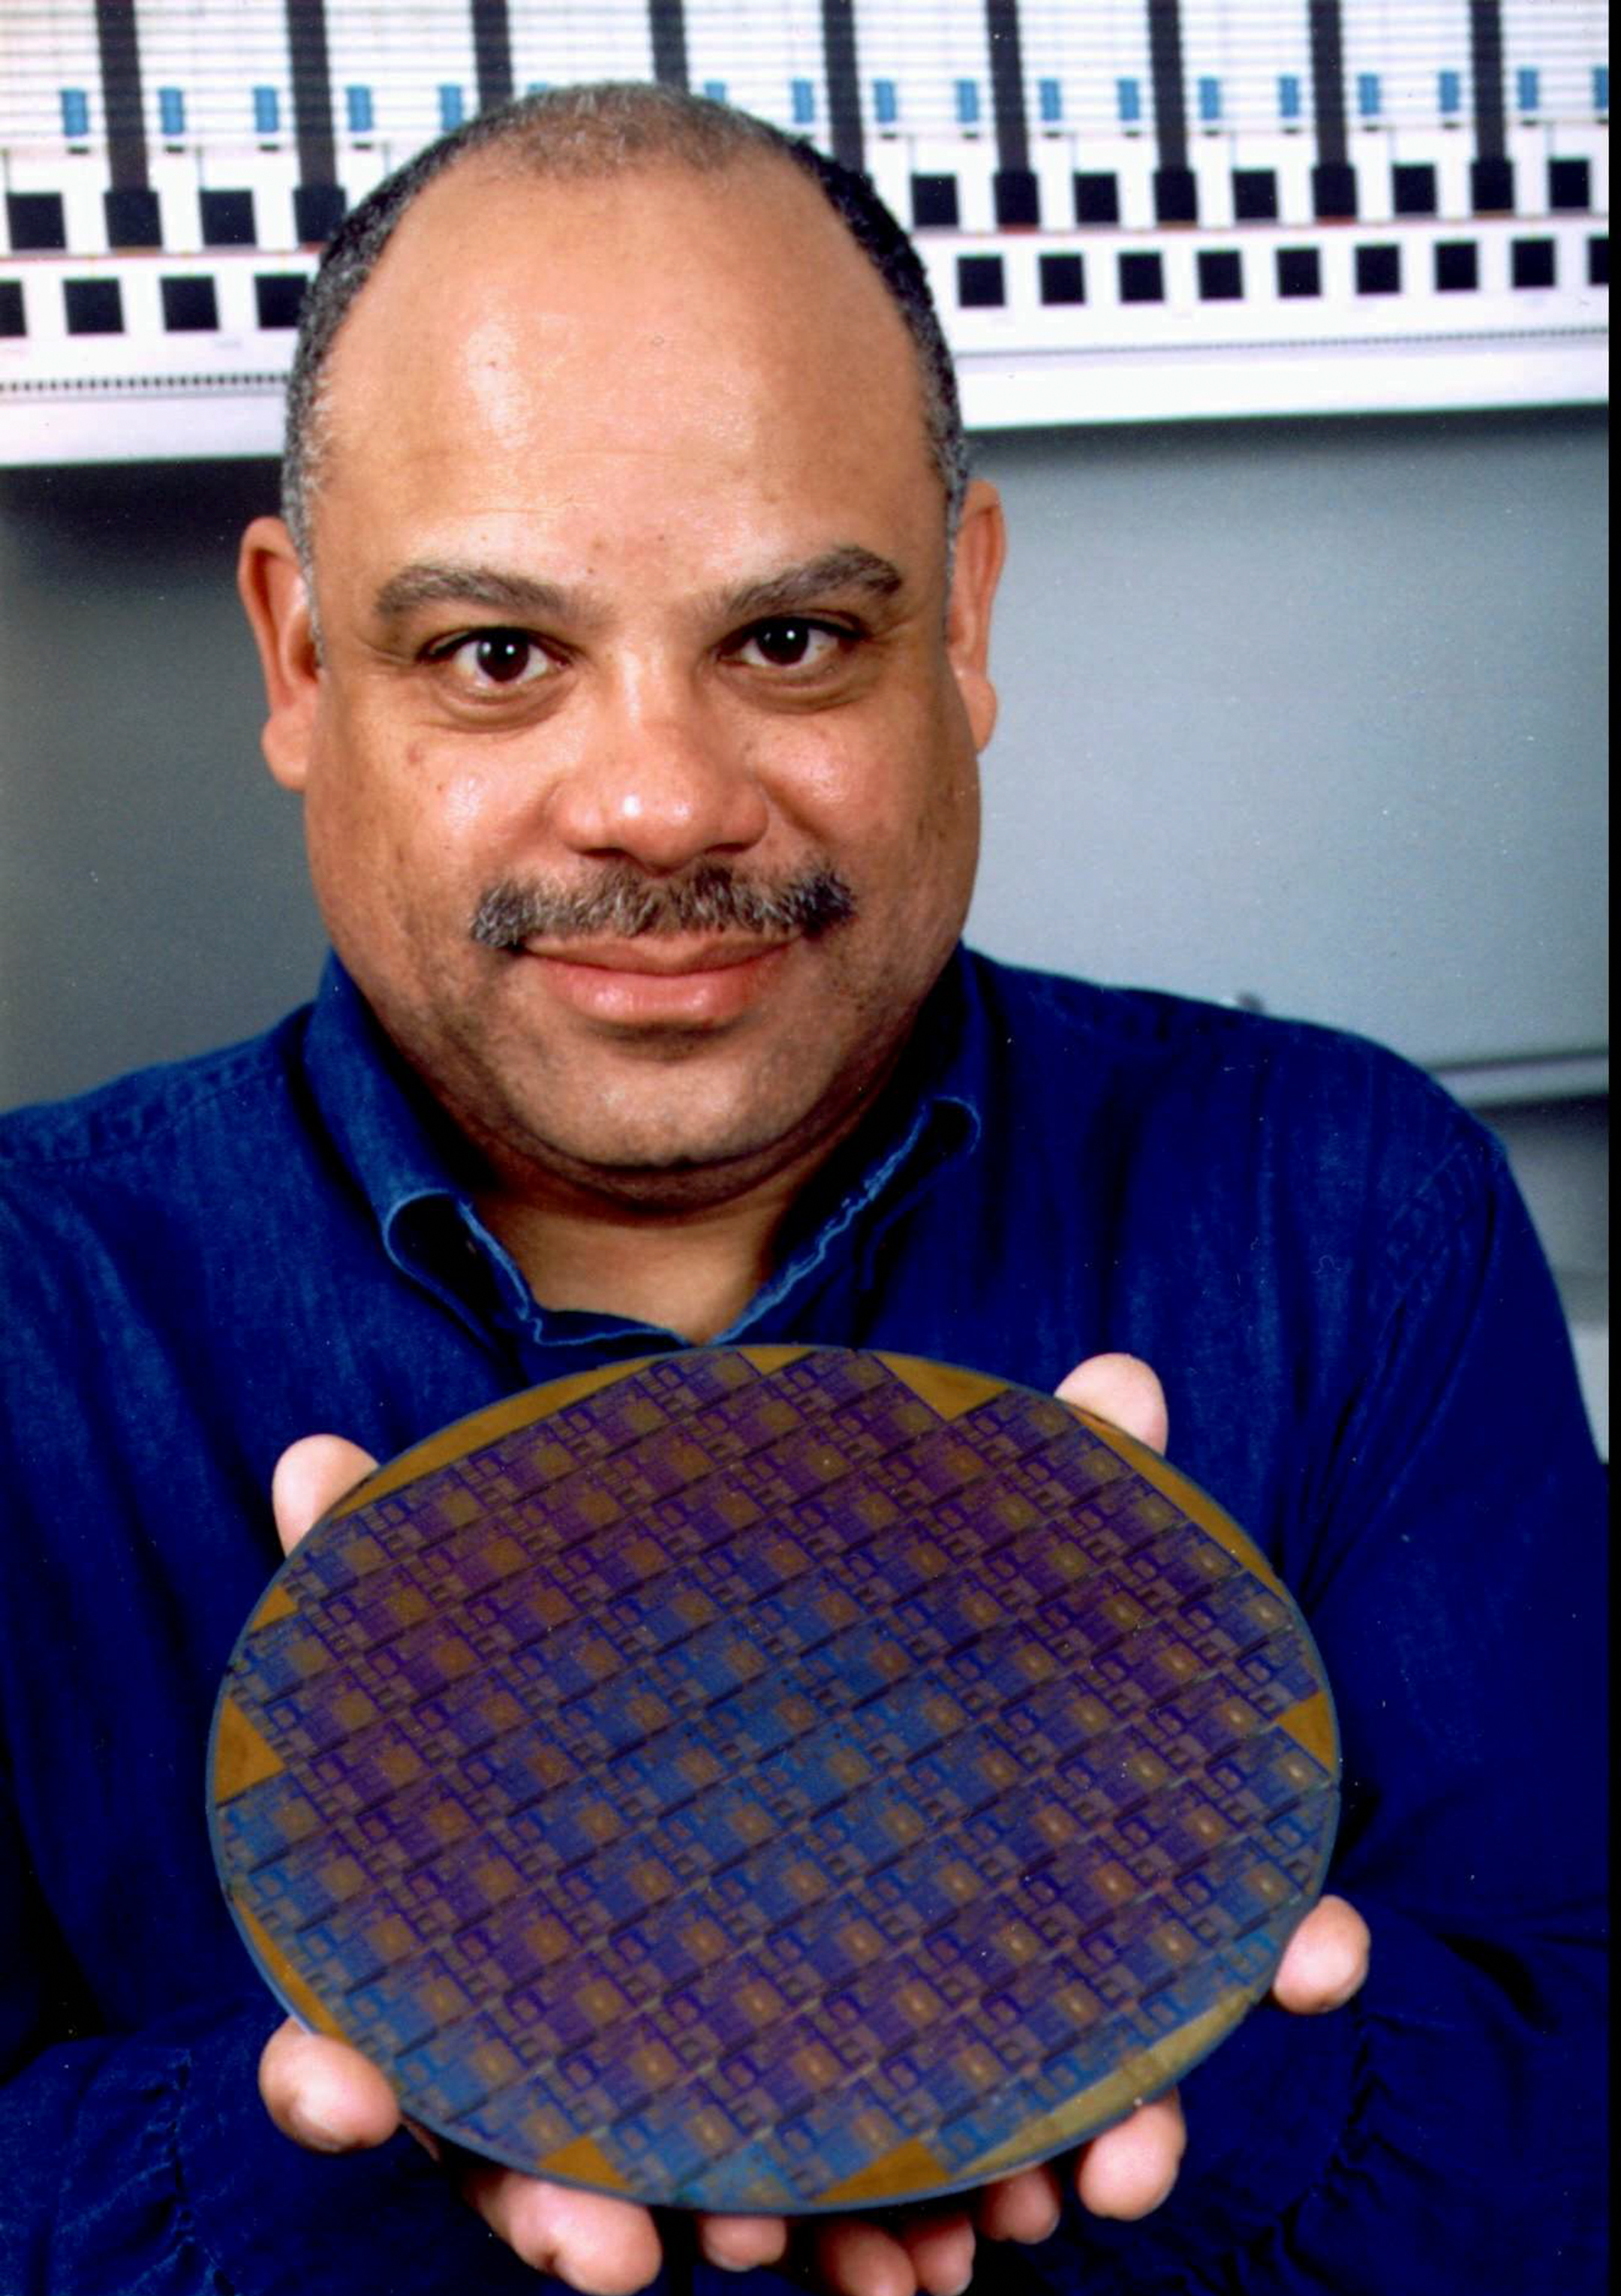 Man holding a large circular computer chip